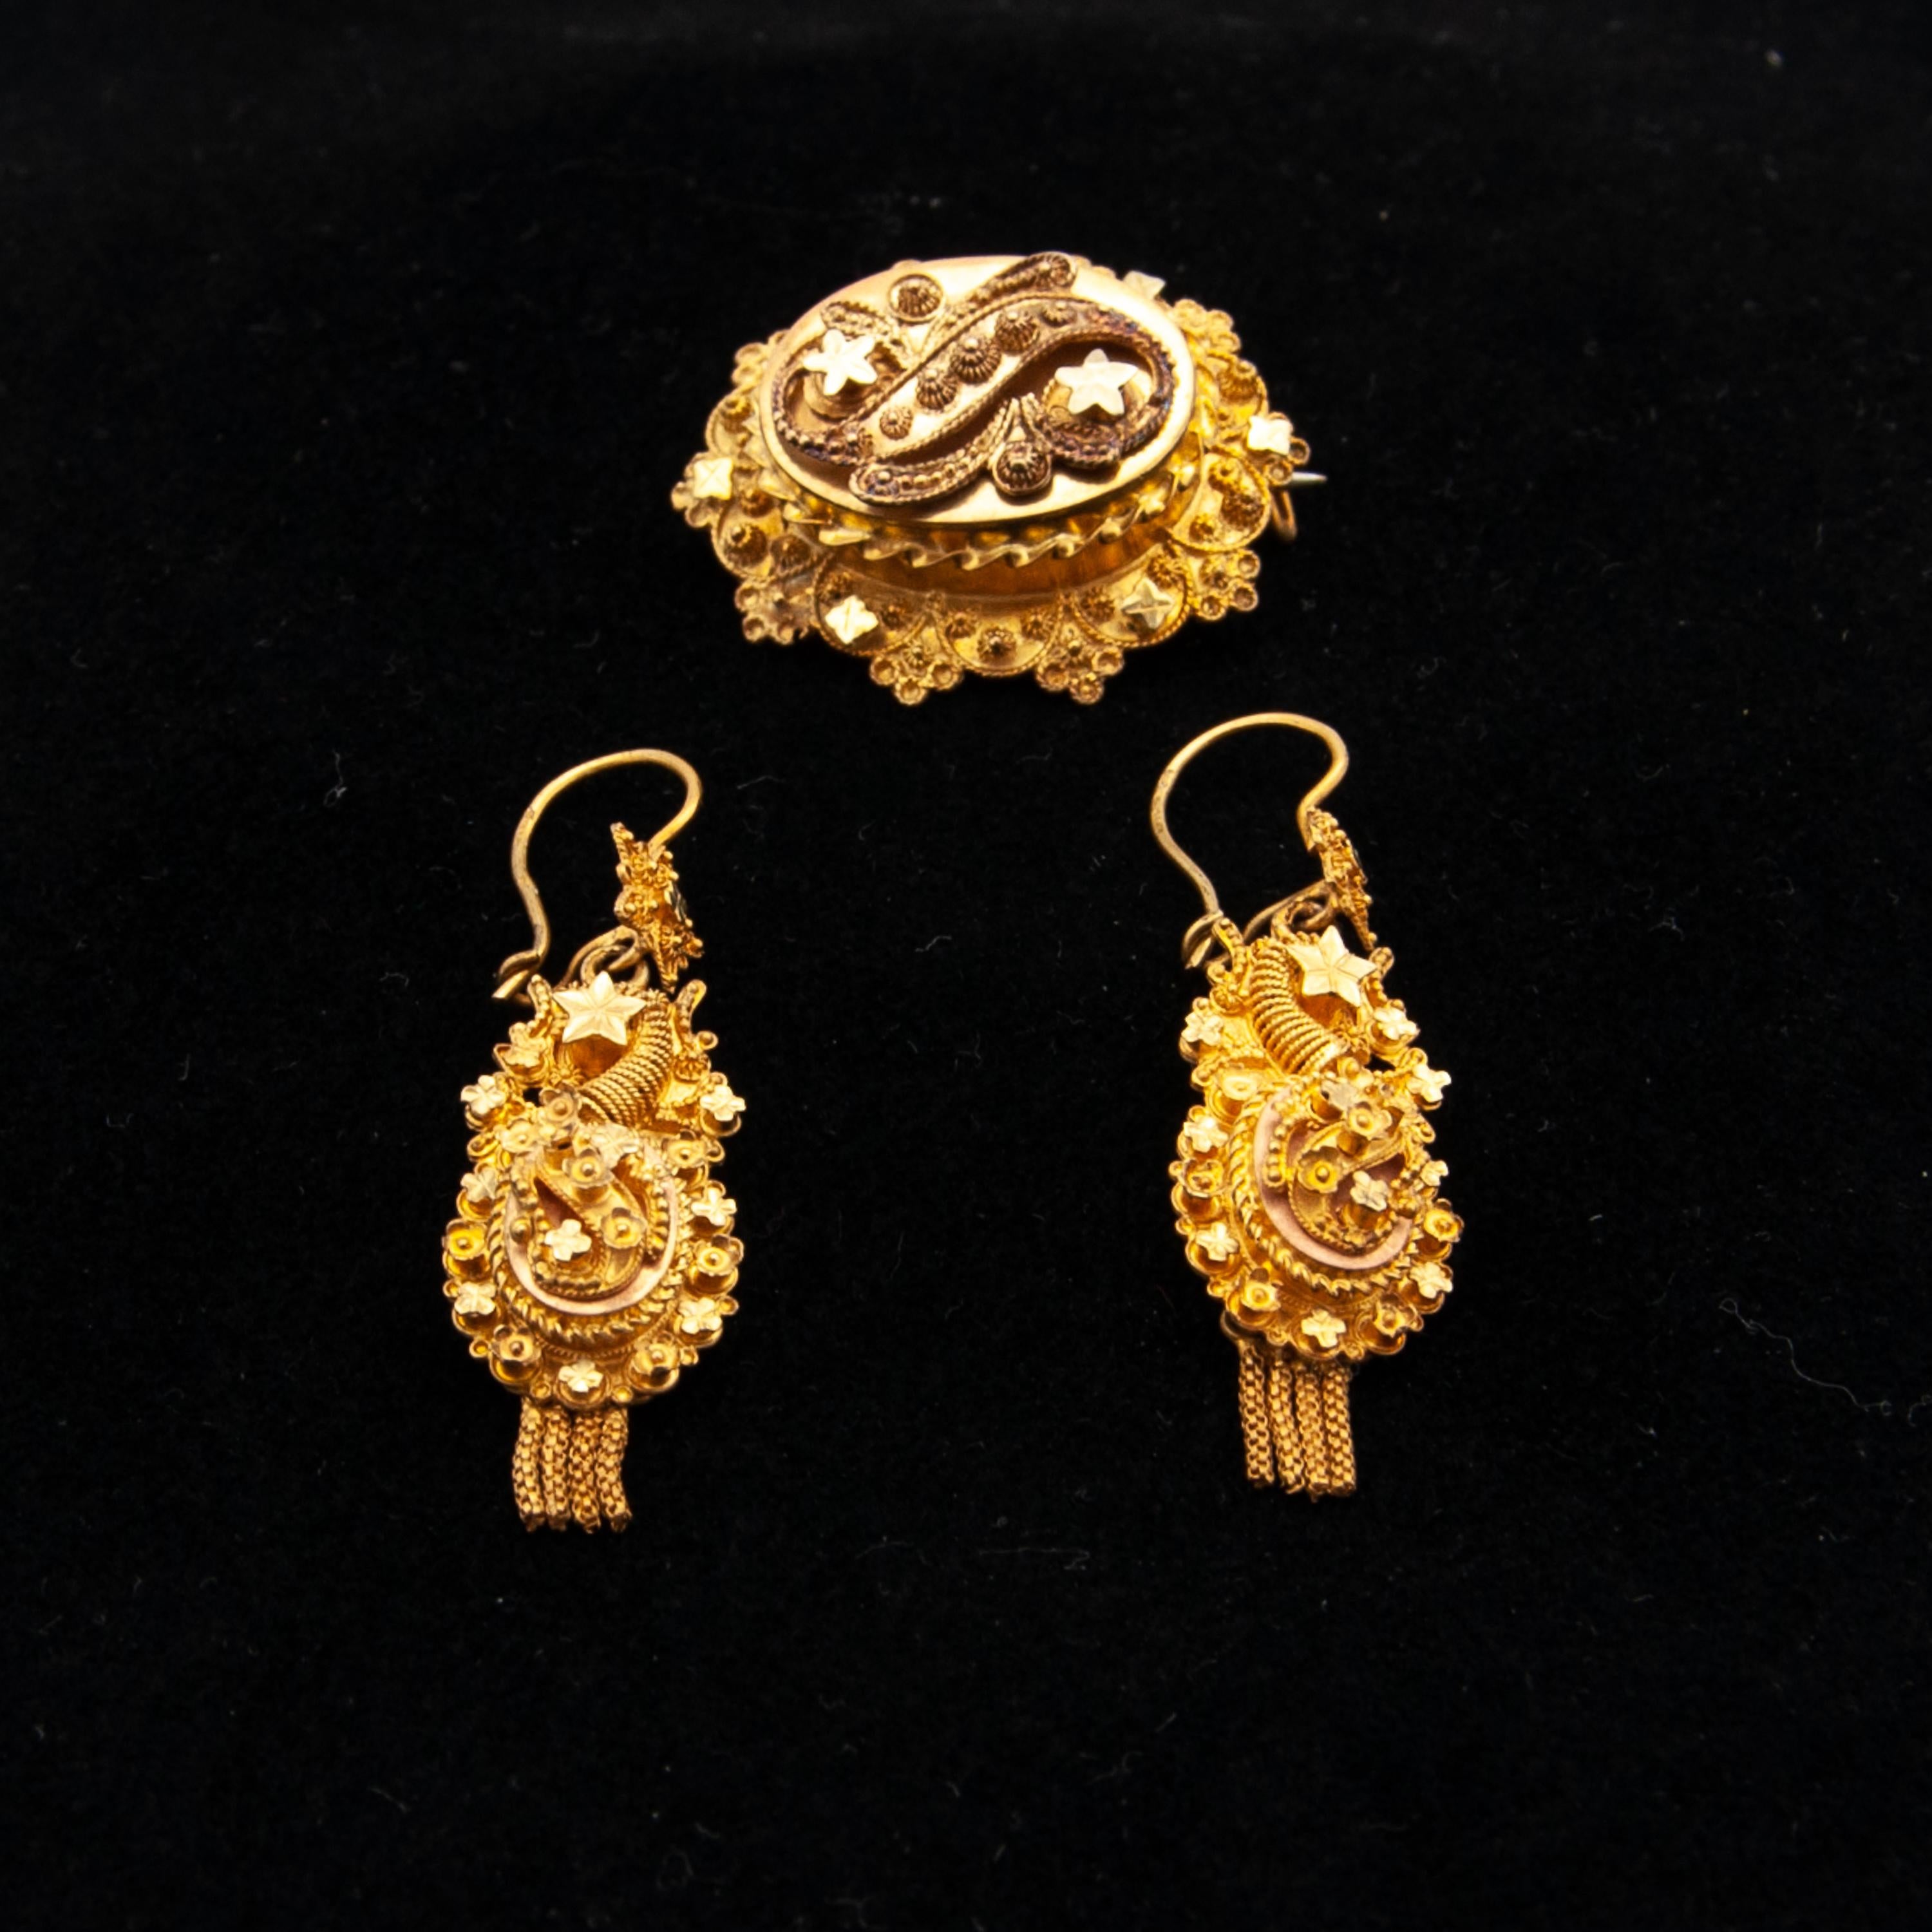 Women's Antique 14K Yellow Gold Tassel Earrings and Brooch, Jewelry Set For Sale